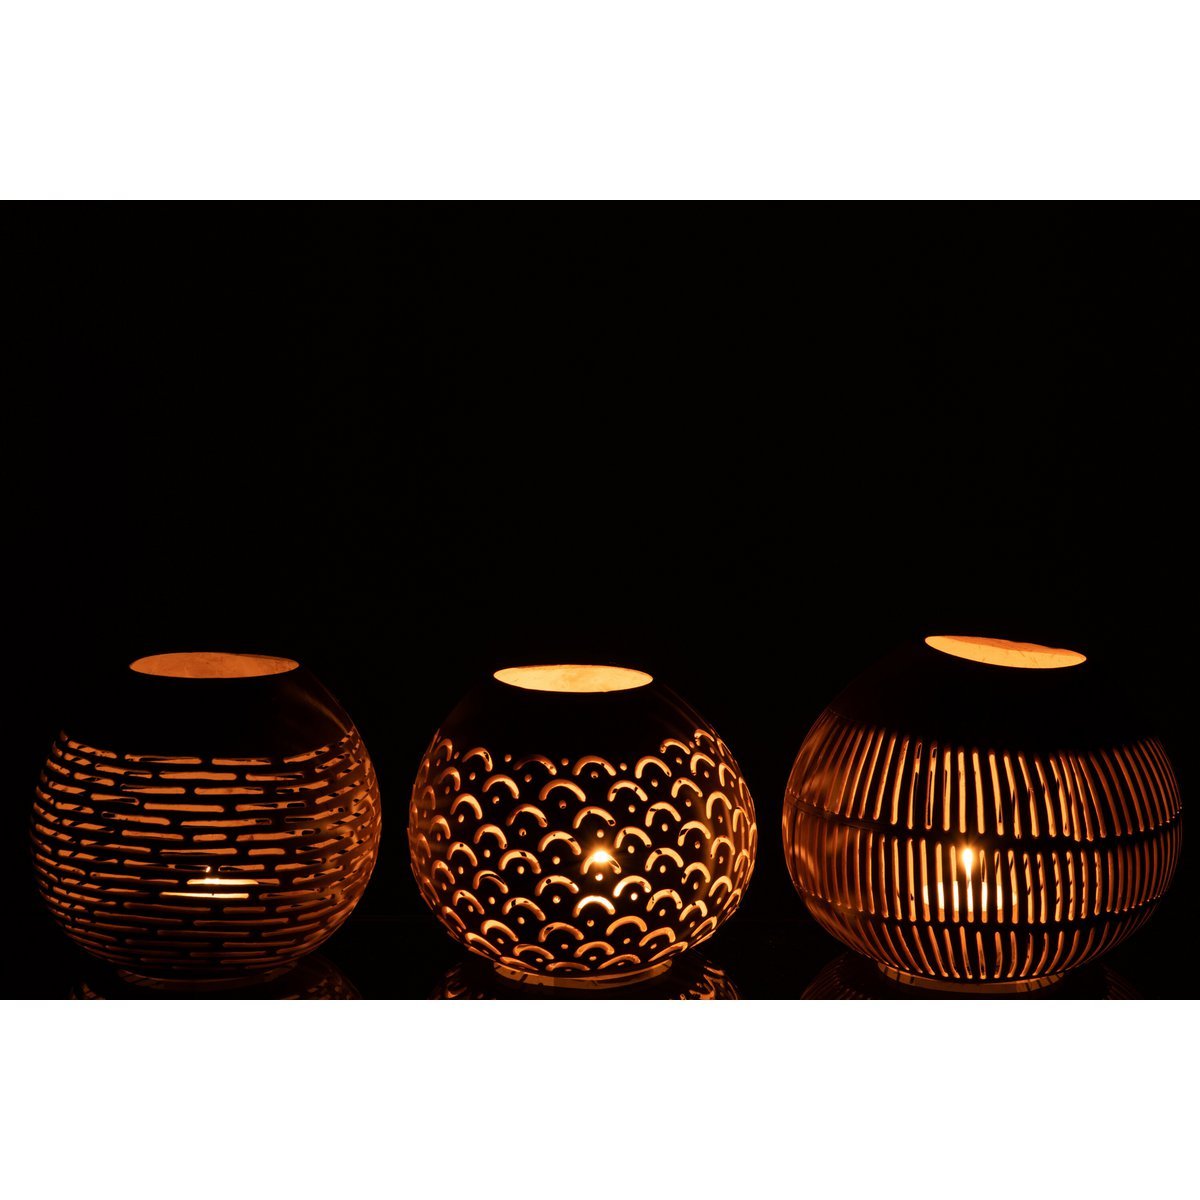 "Coconut" lanterns - set of 3 made of coconut shells, natural decoration